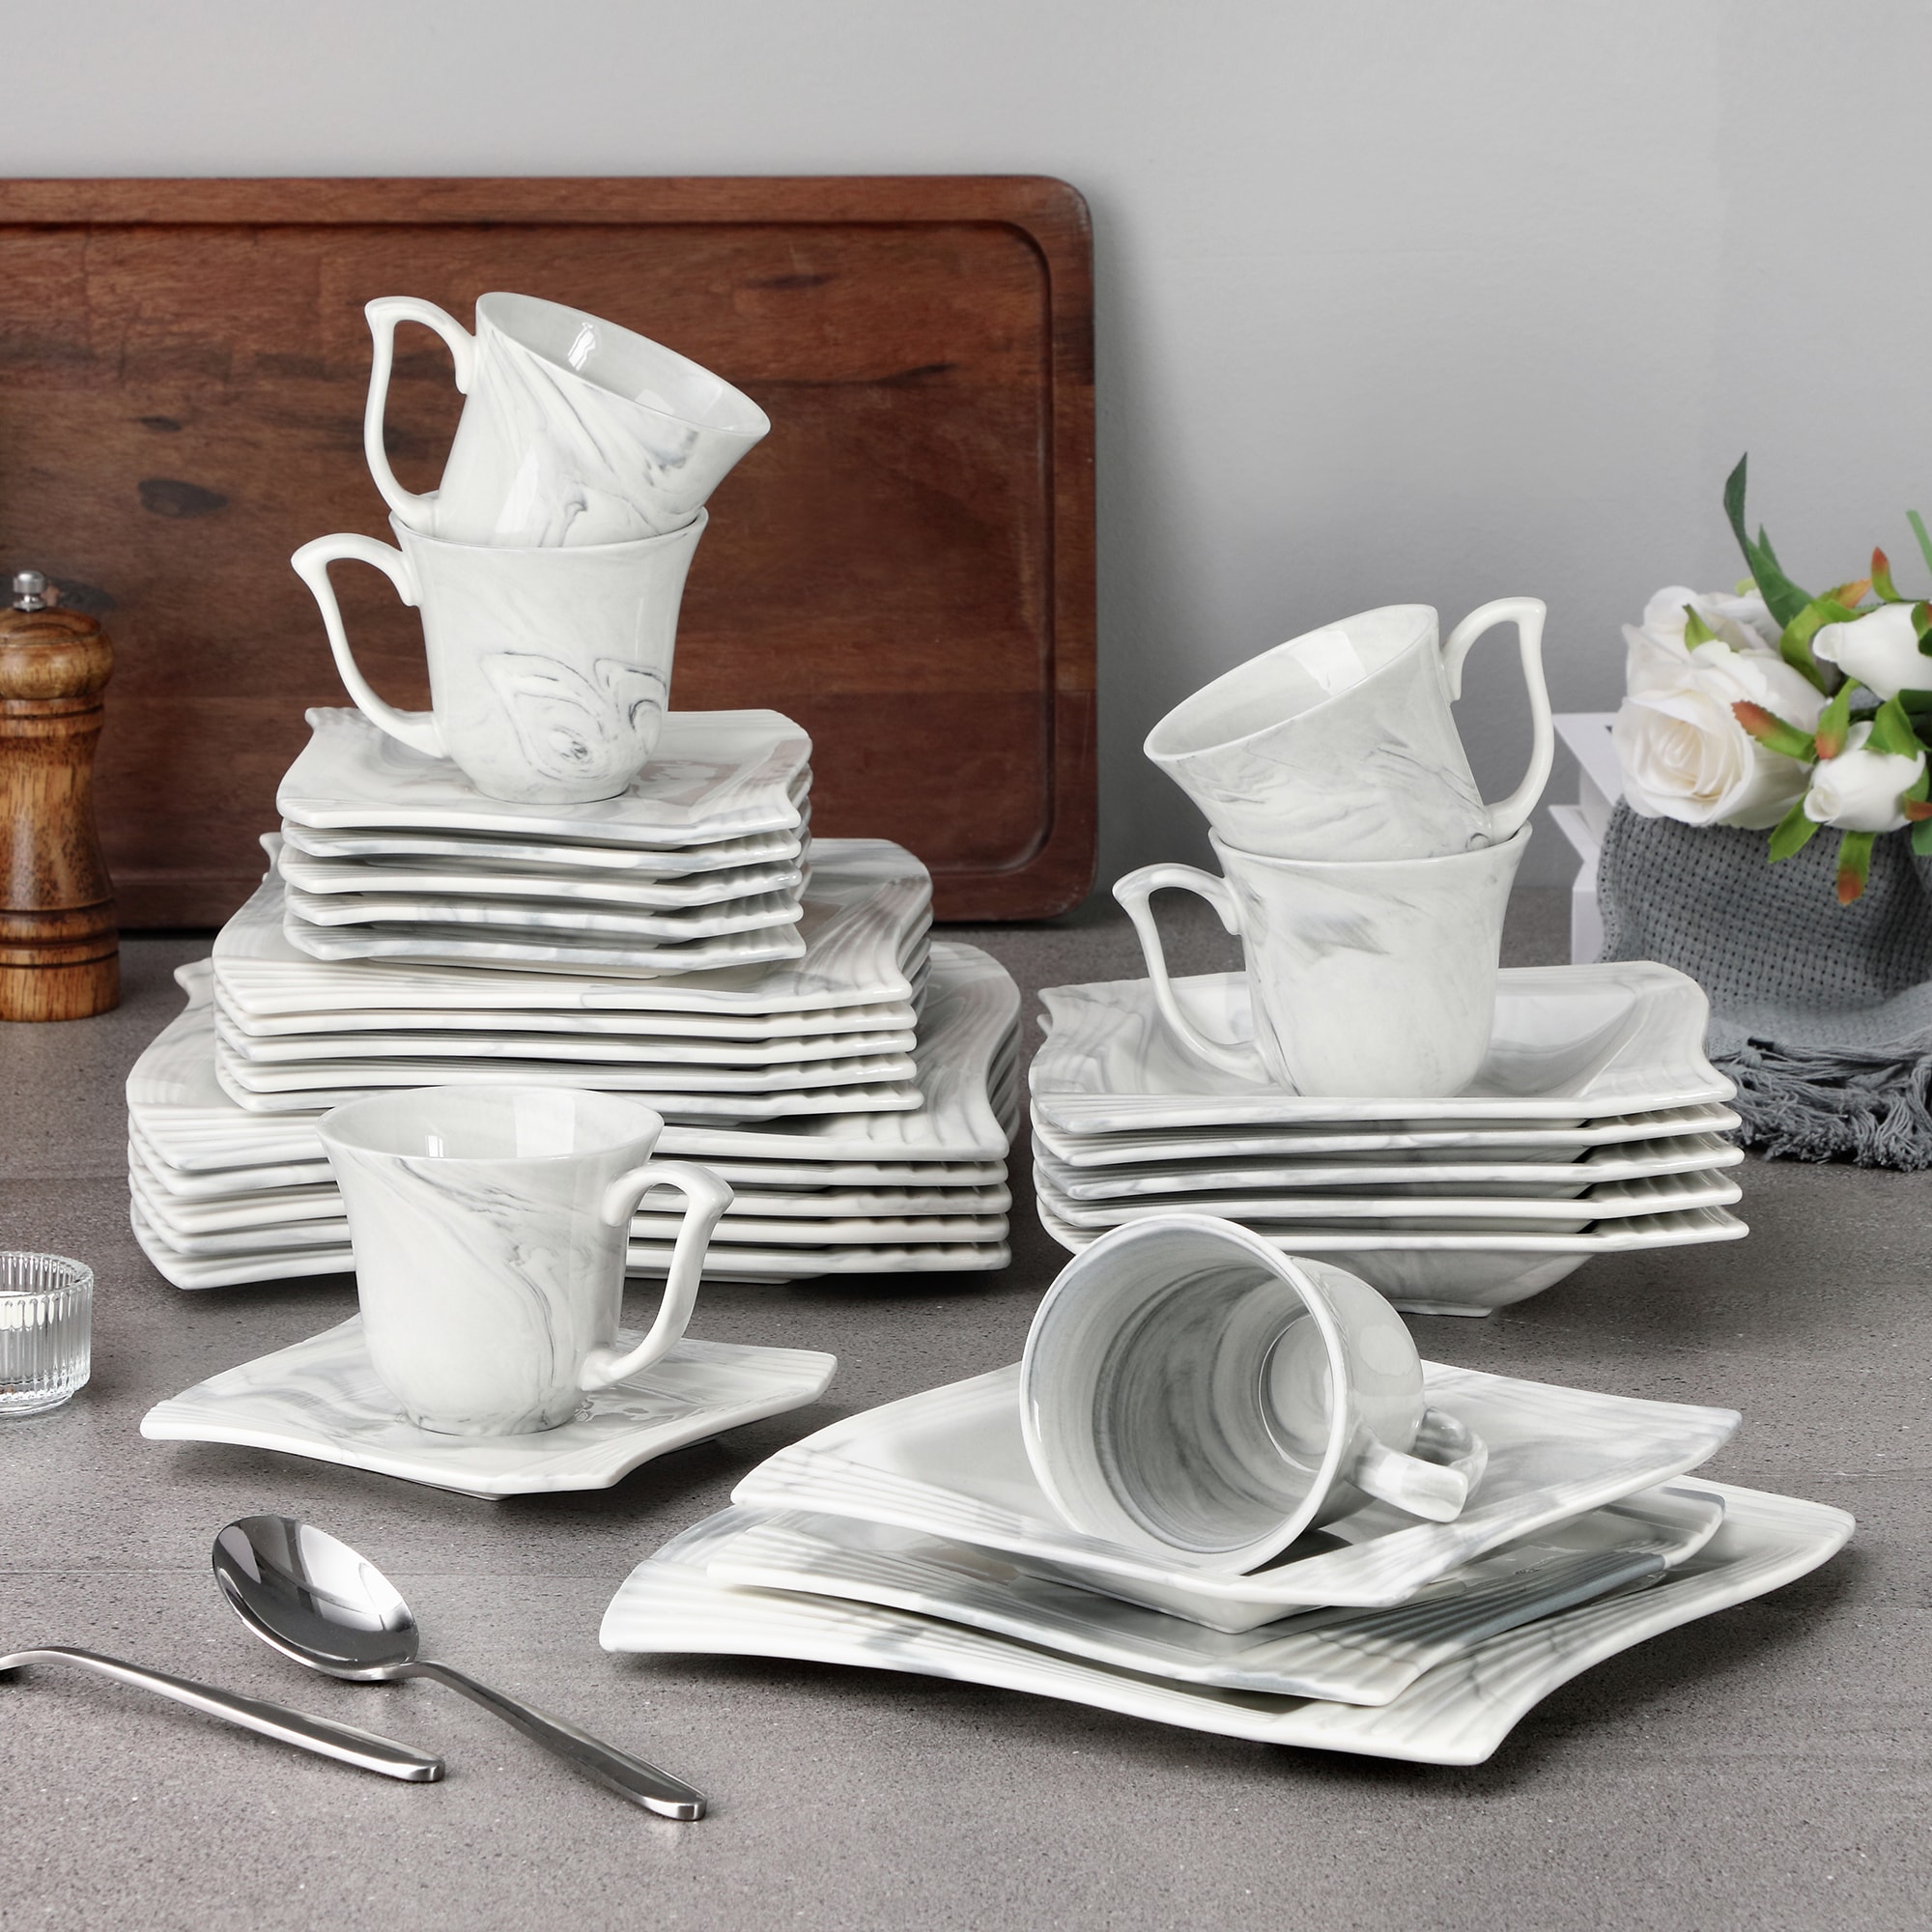 Malacasa Elvira 60-piece White Porcelain Tableware Dinner Set With